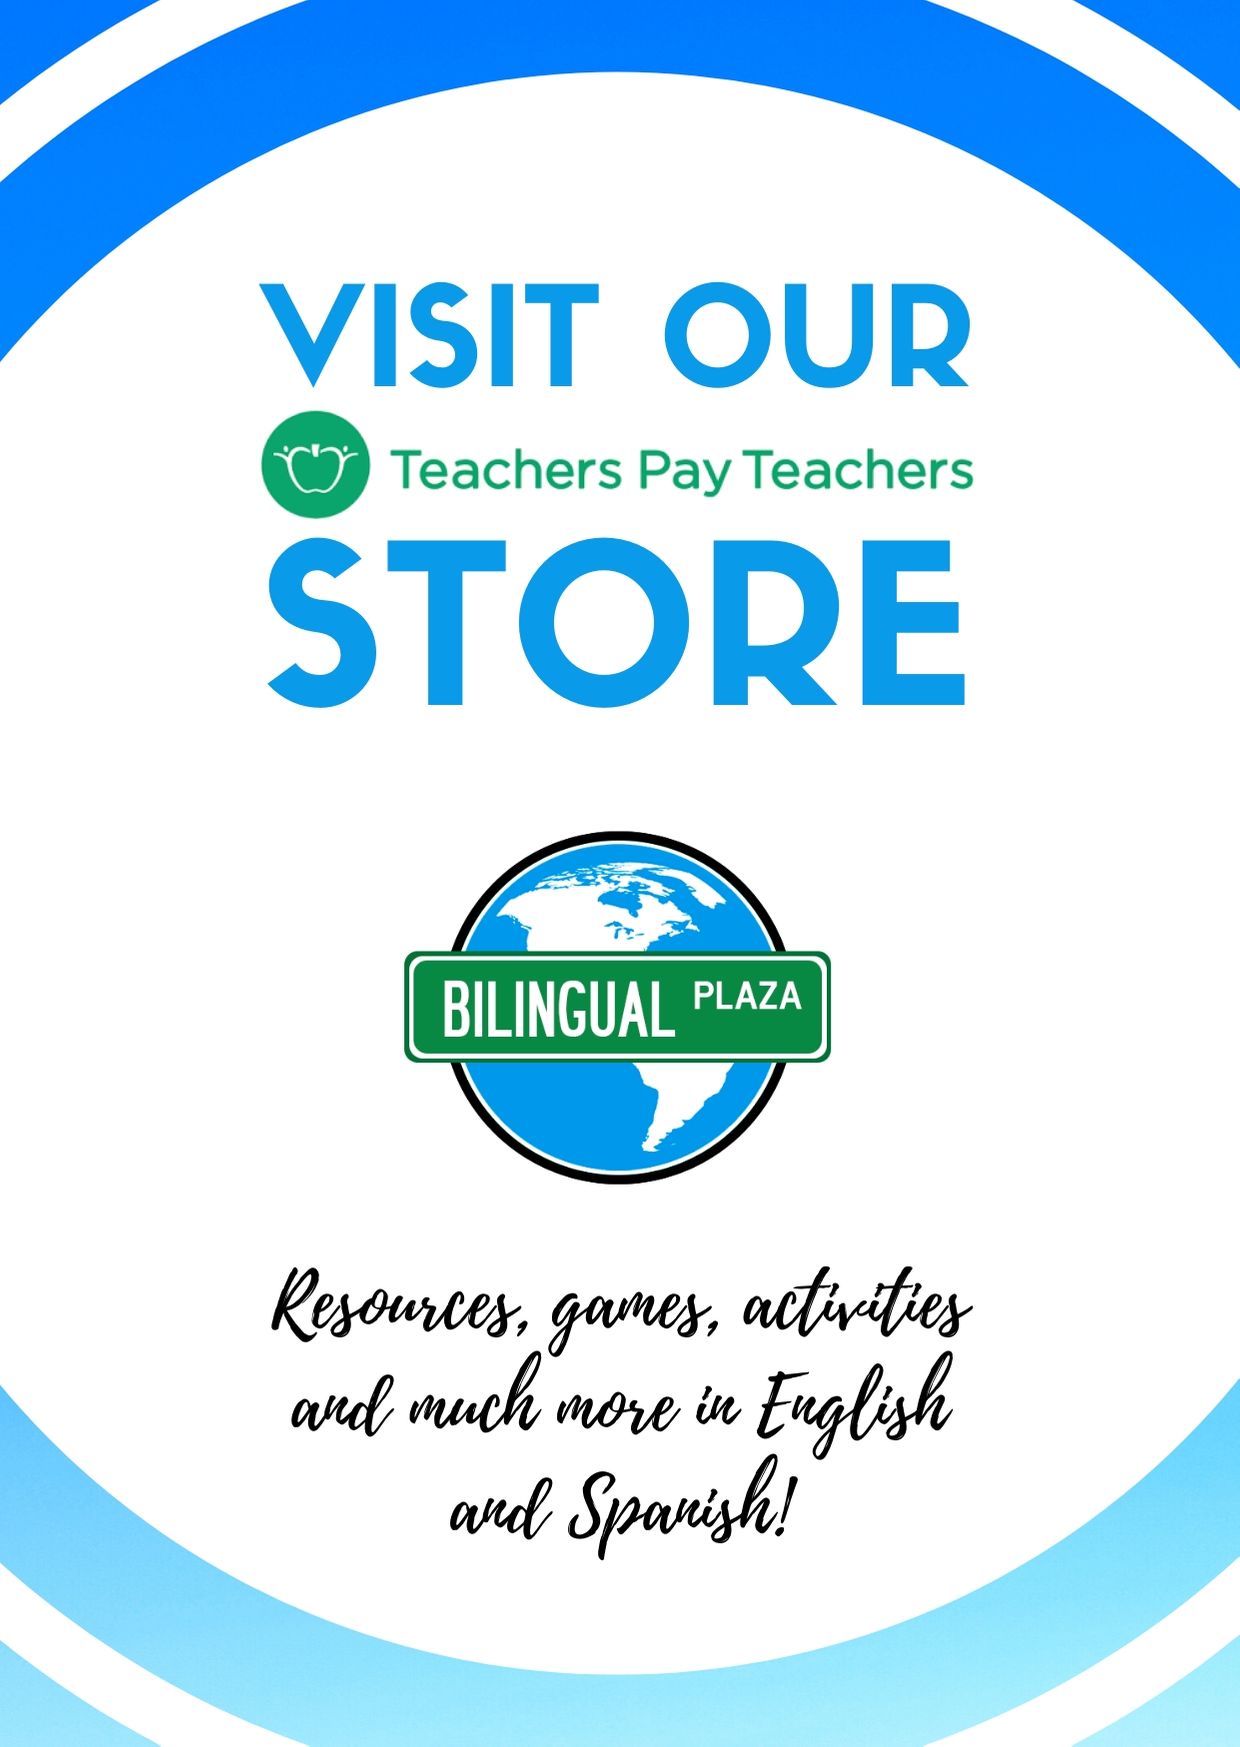 The Bilingual Plaza Teachers Pay Teacher Store